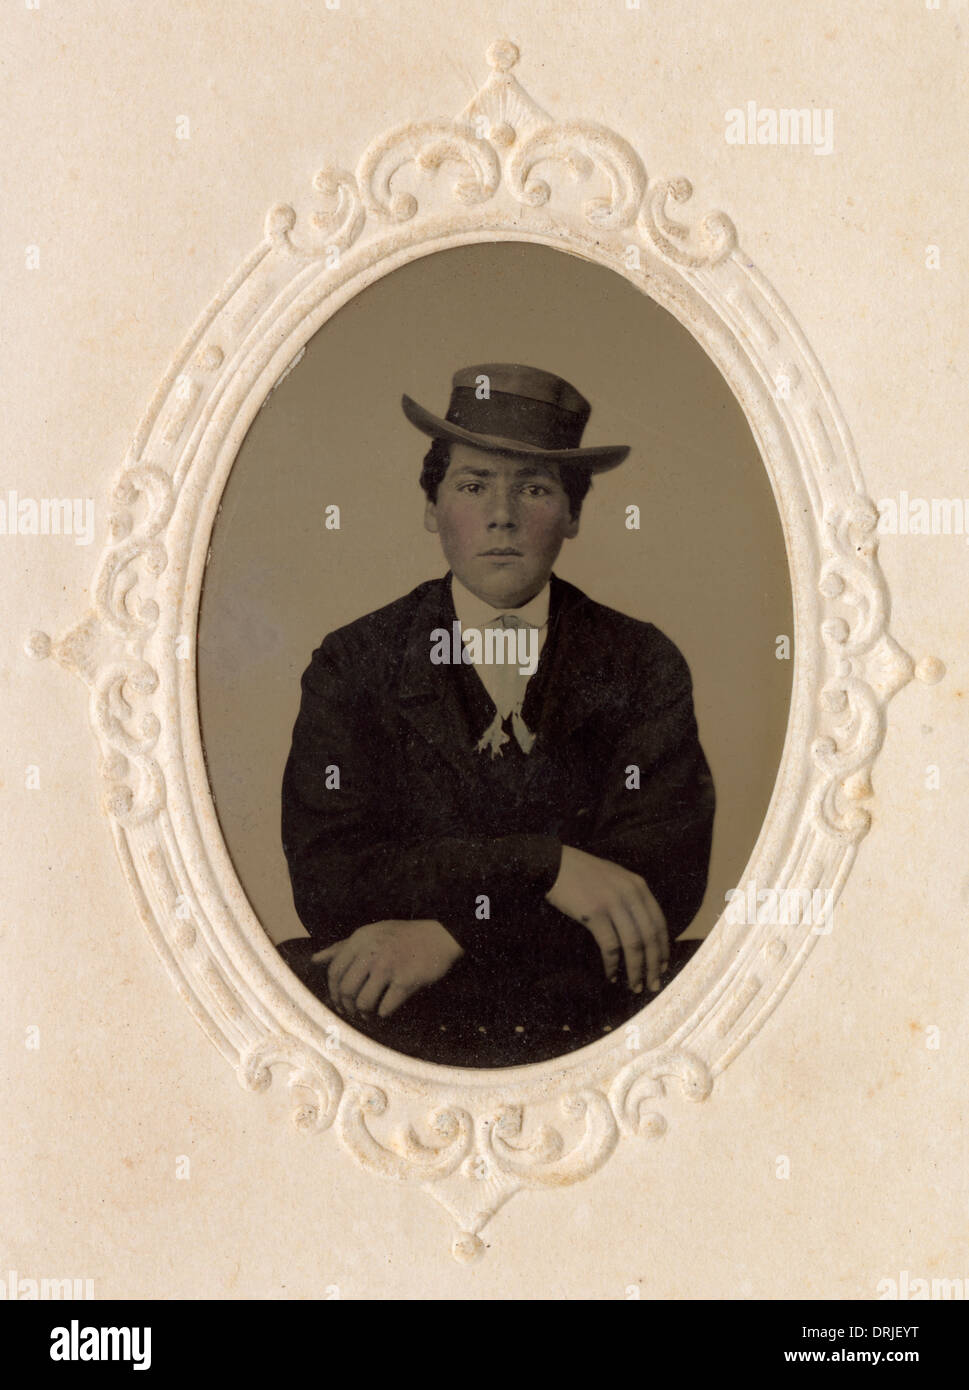 American Civil War era Tintype photograph Stock Photo